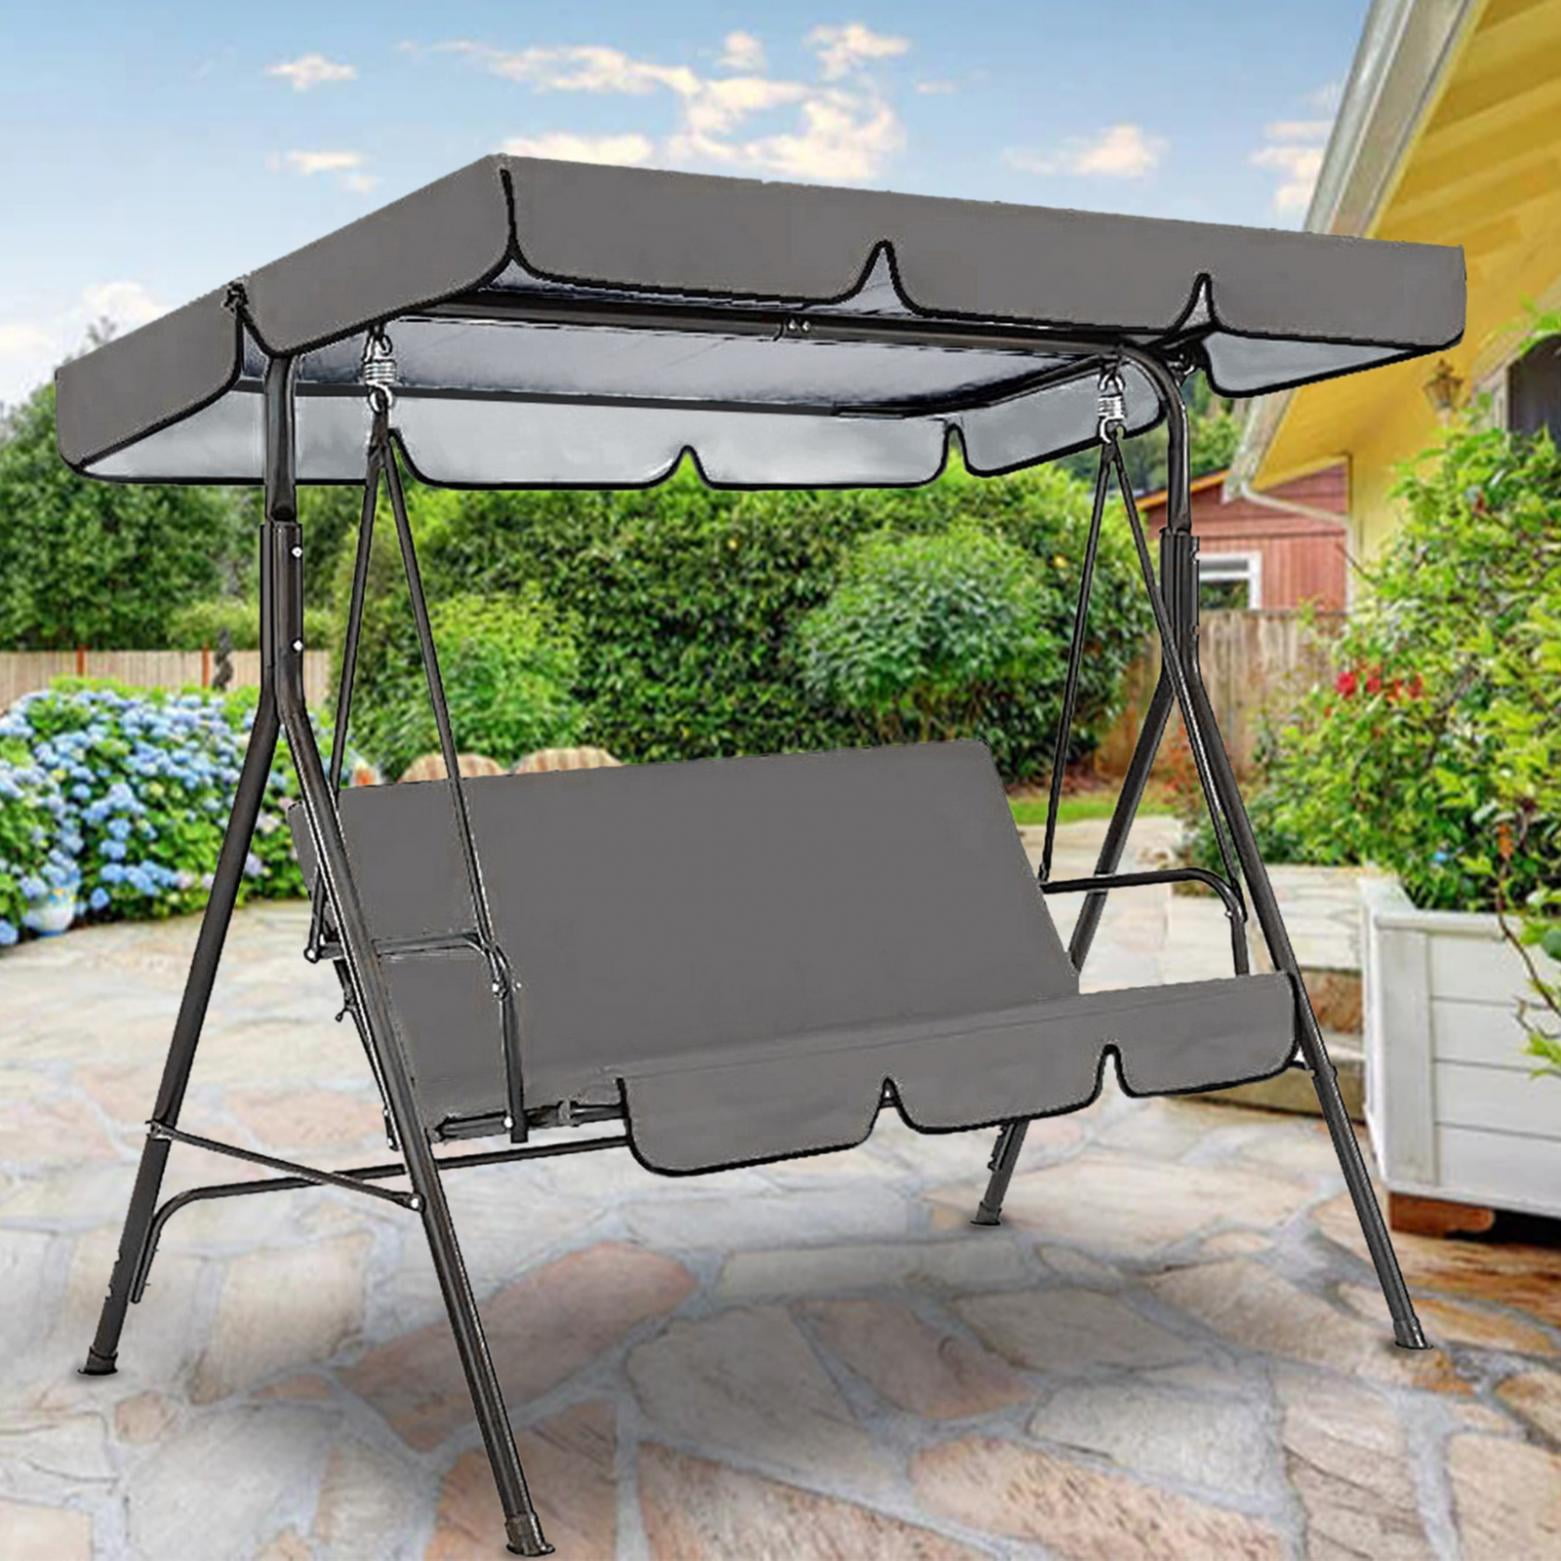 Swing Cover Chair Waterproof Cushion Patio Garden Yard Outdoor Seat Replacement 